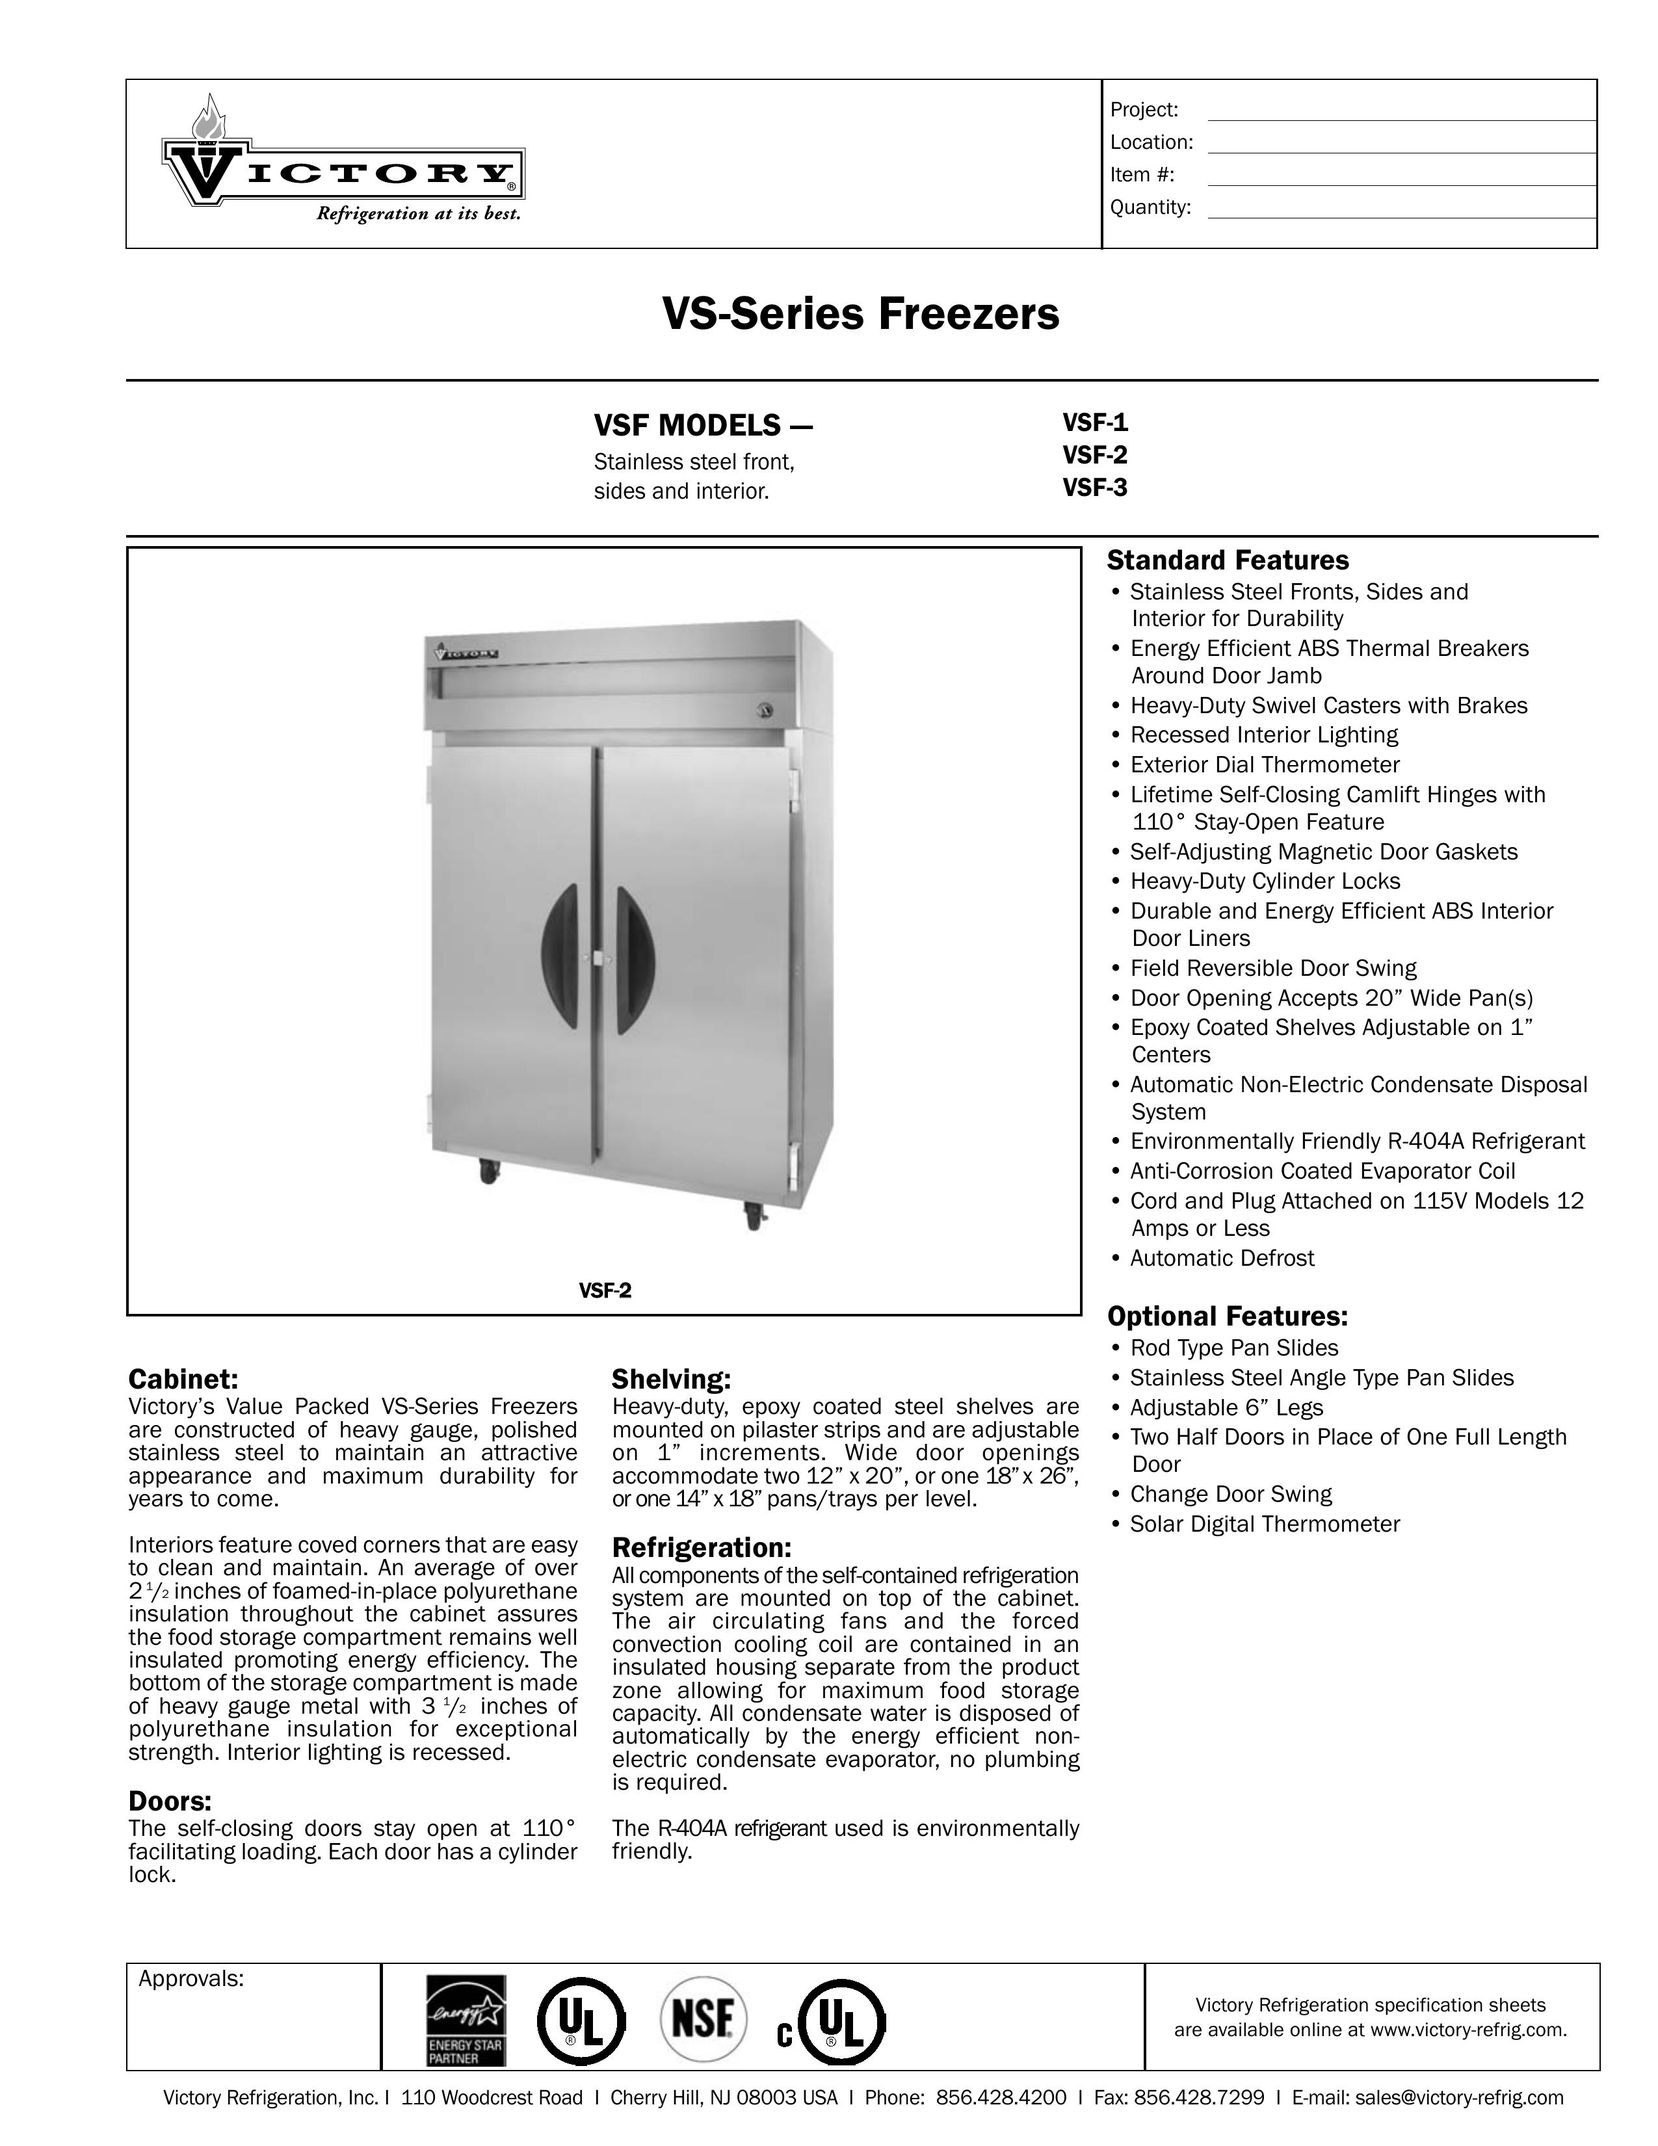 Victory Refrigeration VSF-2 Freezer User Manual